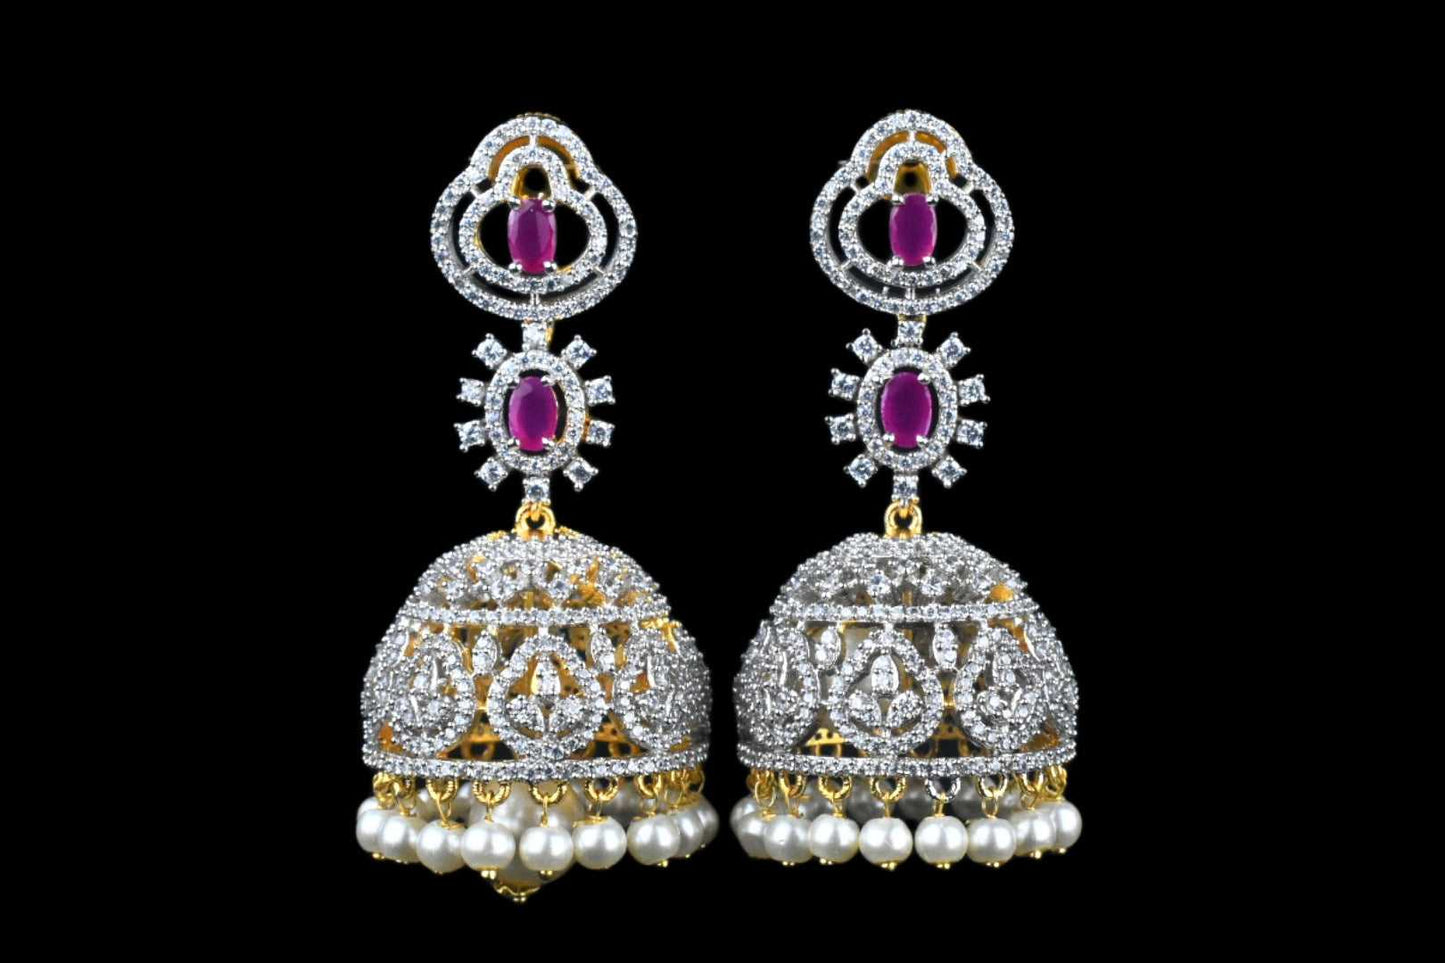 American Diamonds Earrings - Asp fashion jewellery